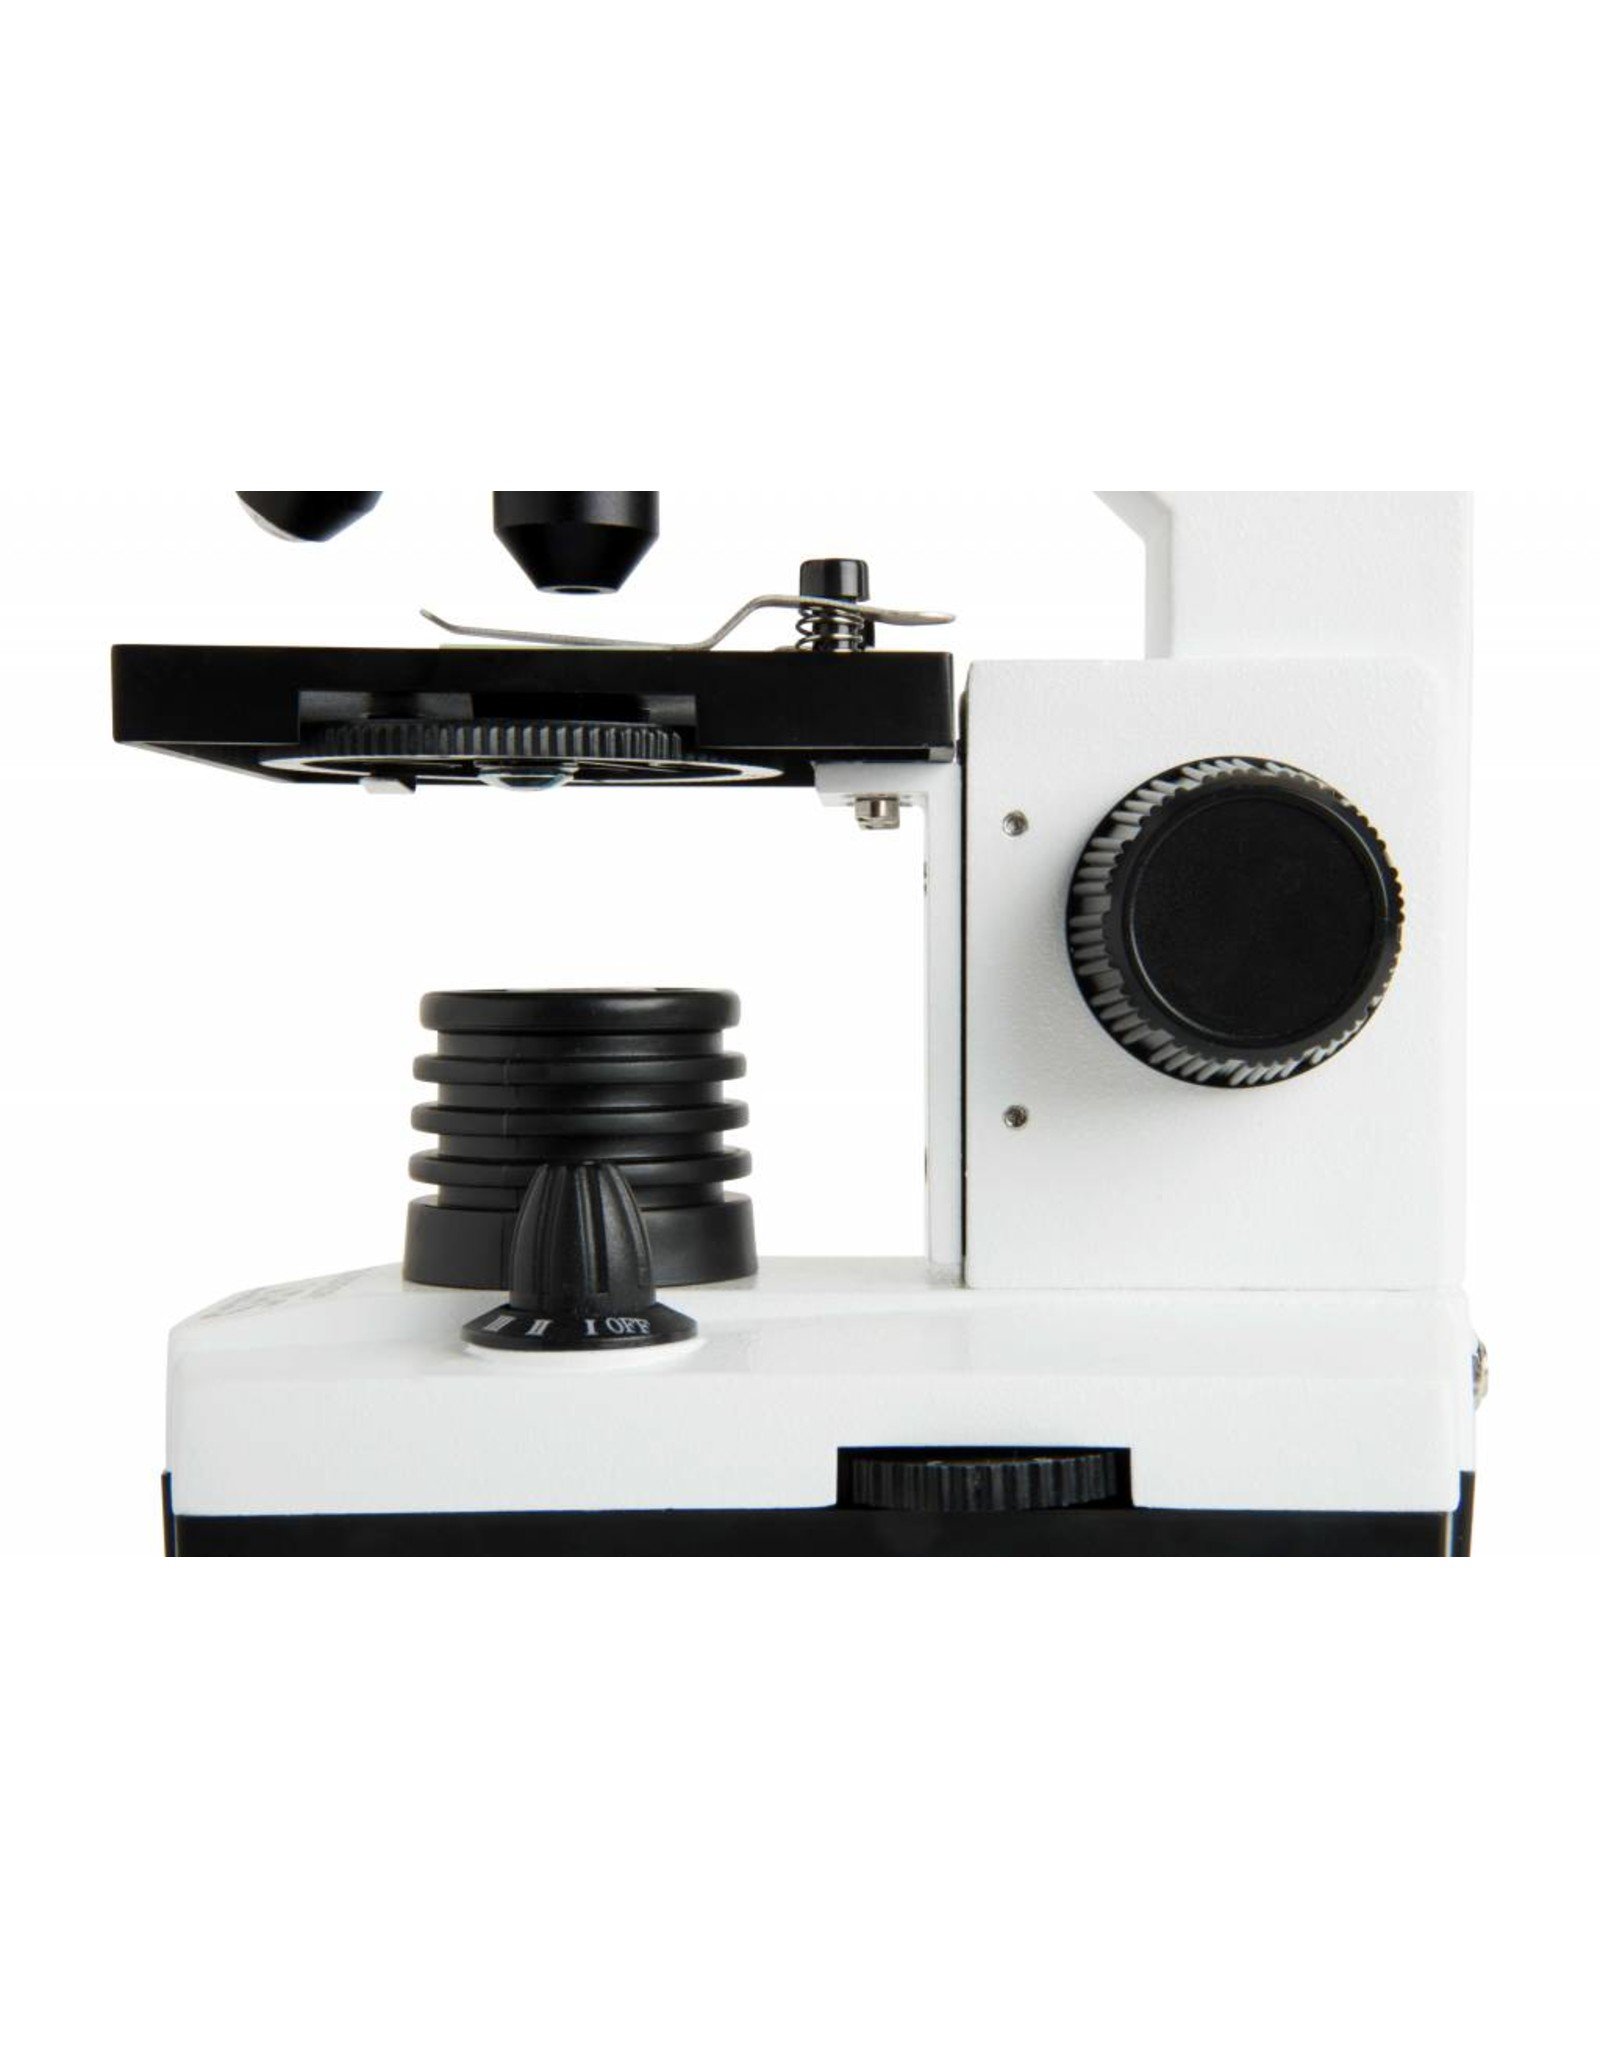 Celestron Labs Cm800 Compound Microscope Camera Concepts And Telescope